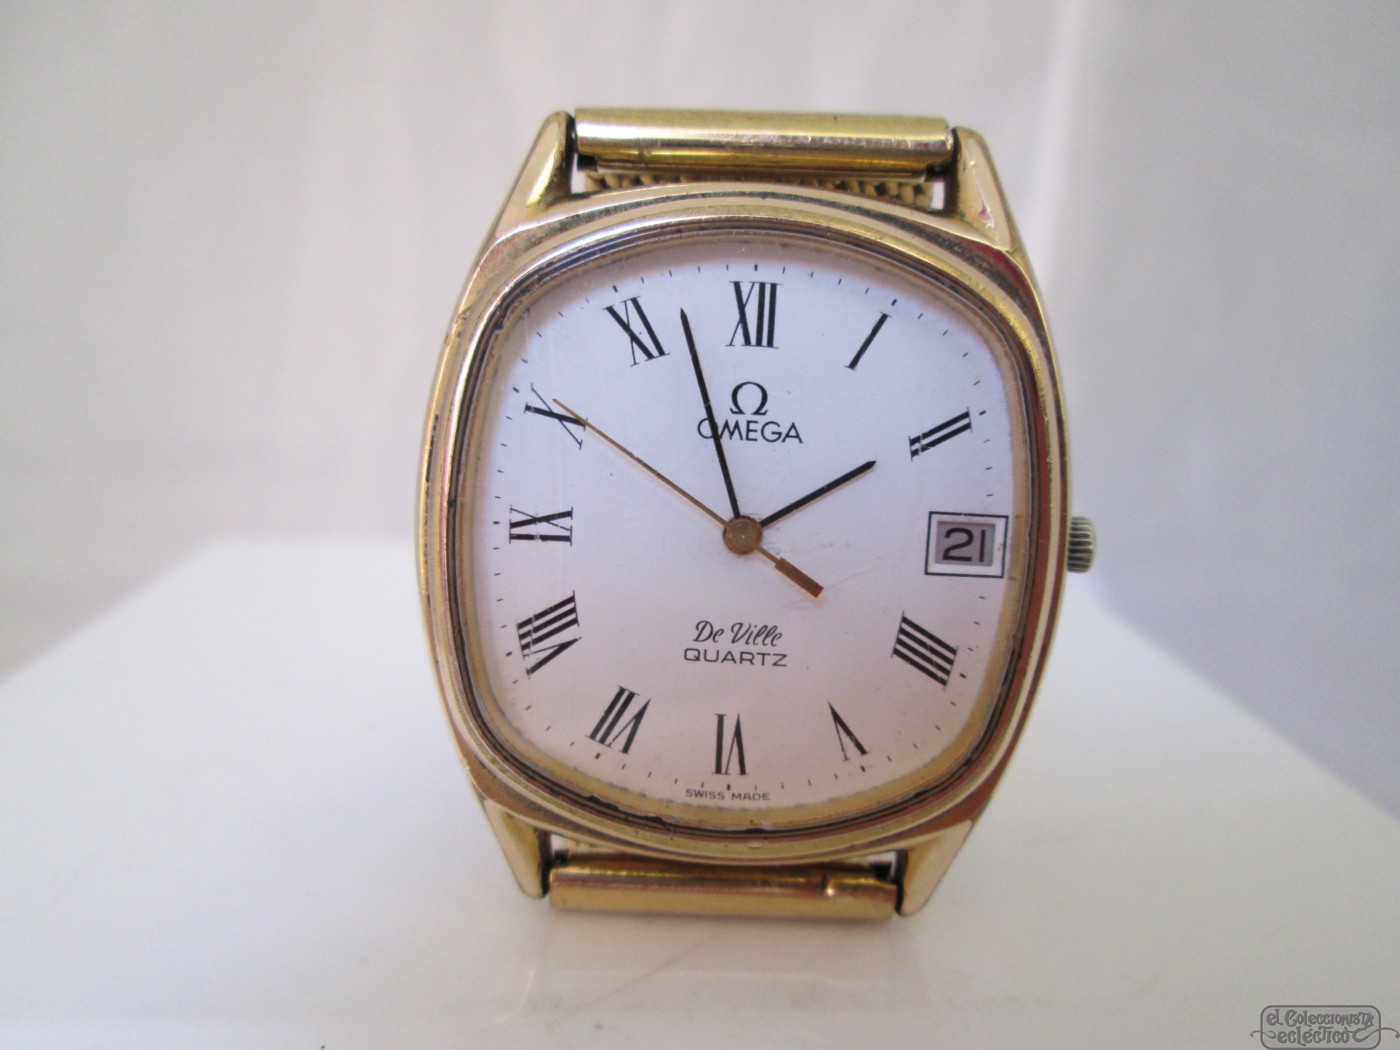 1970's omega deville watch